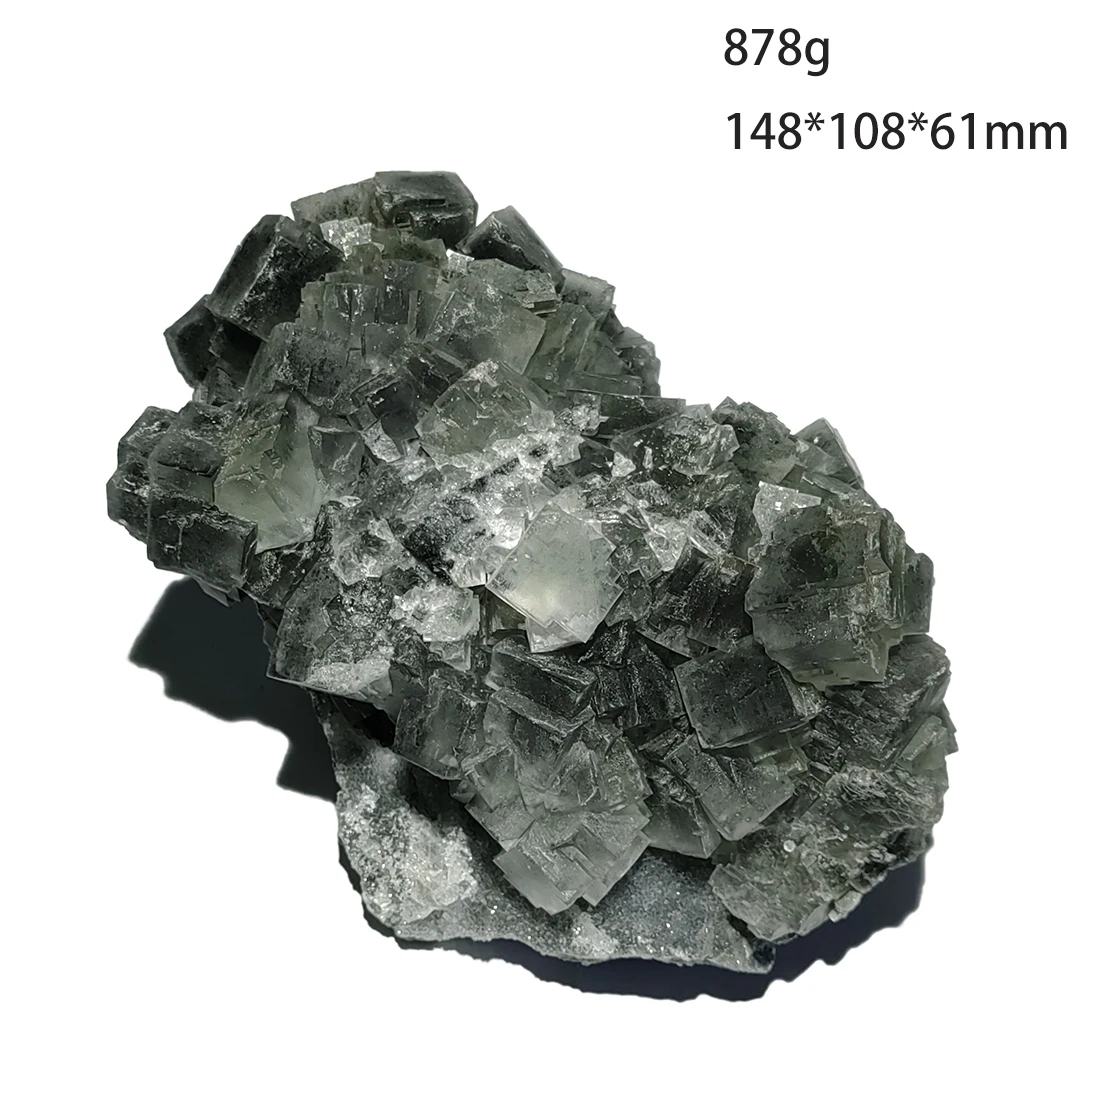 

C6-7B 100% Natural Green Fluorite Mineral Crystal Specimen Fujian Province China